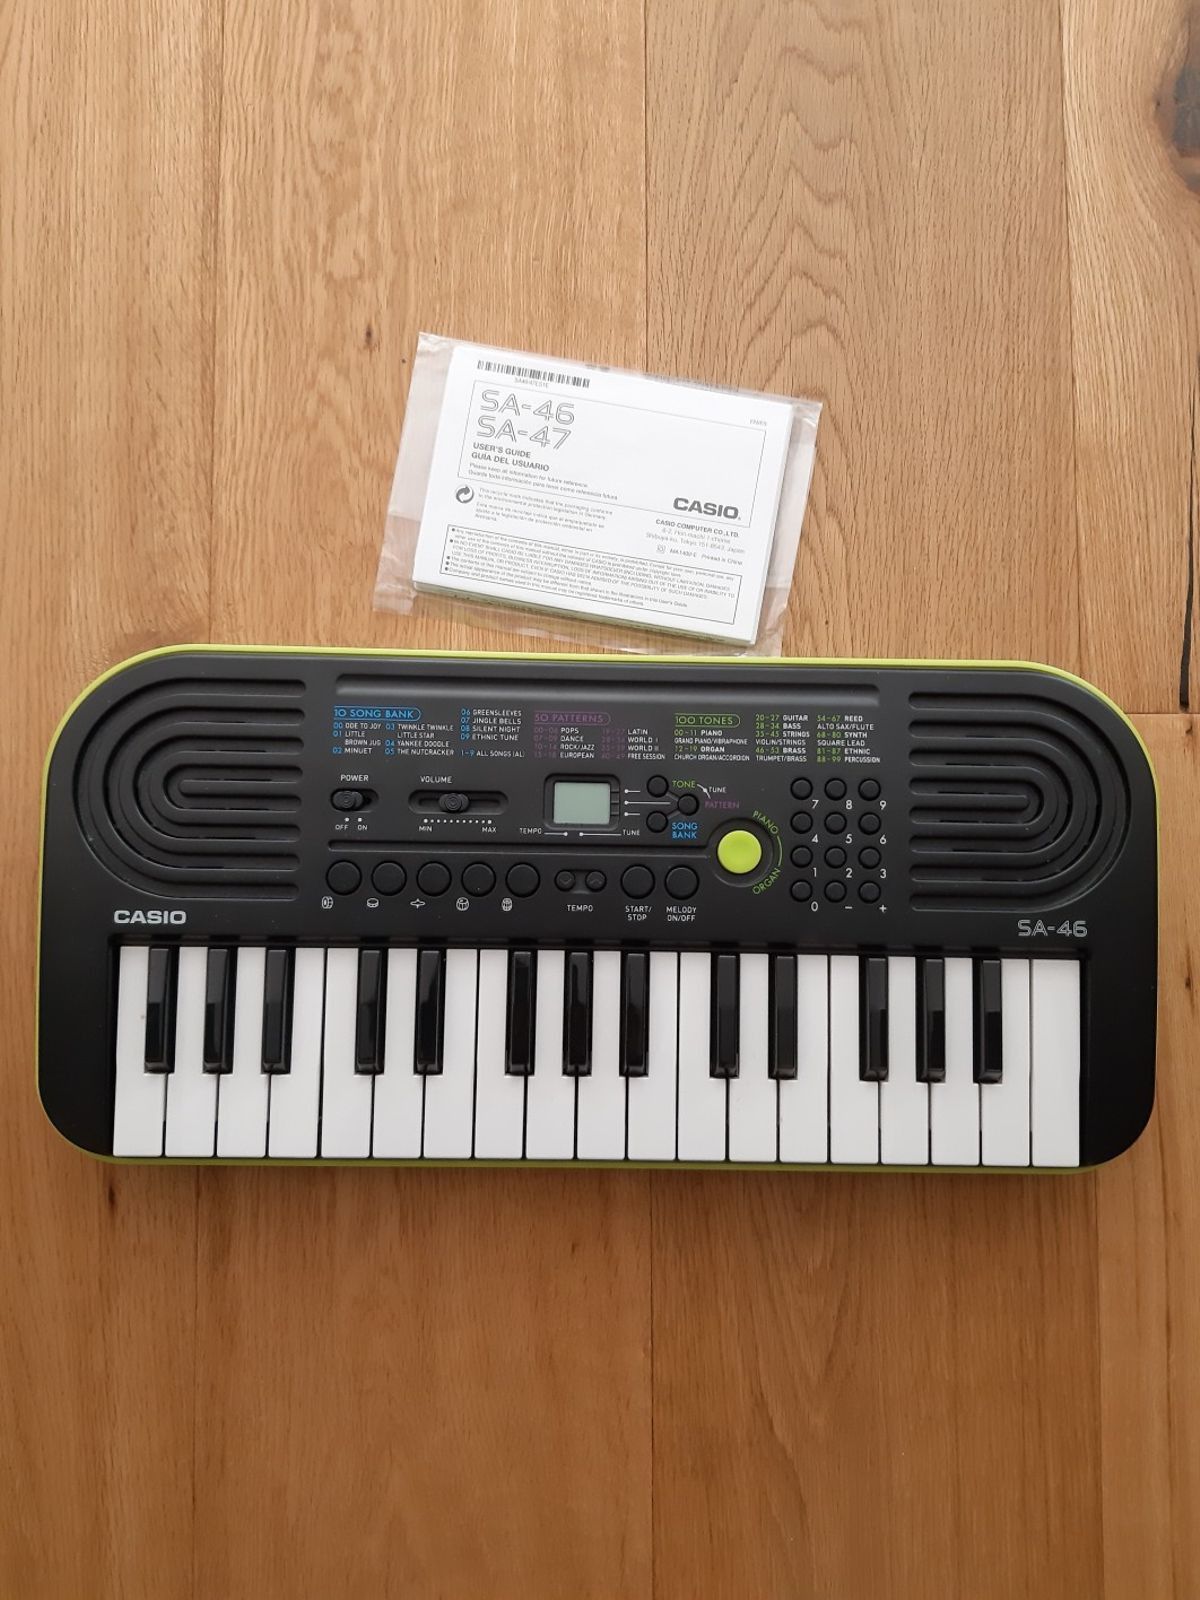 Mini keyboard casio green works perfectly